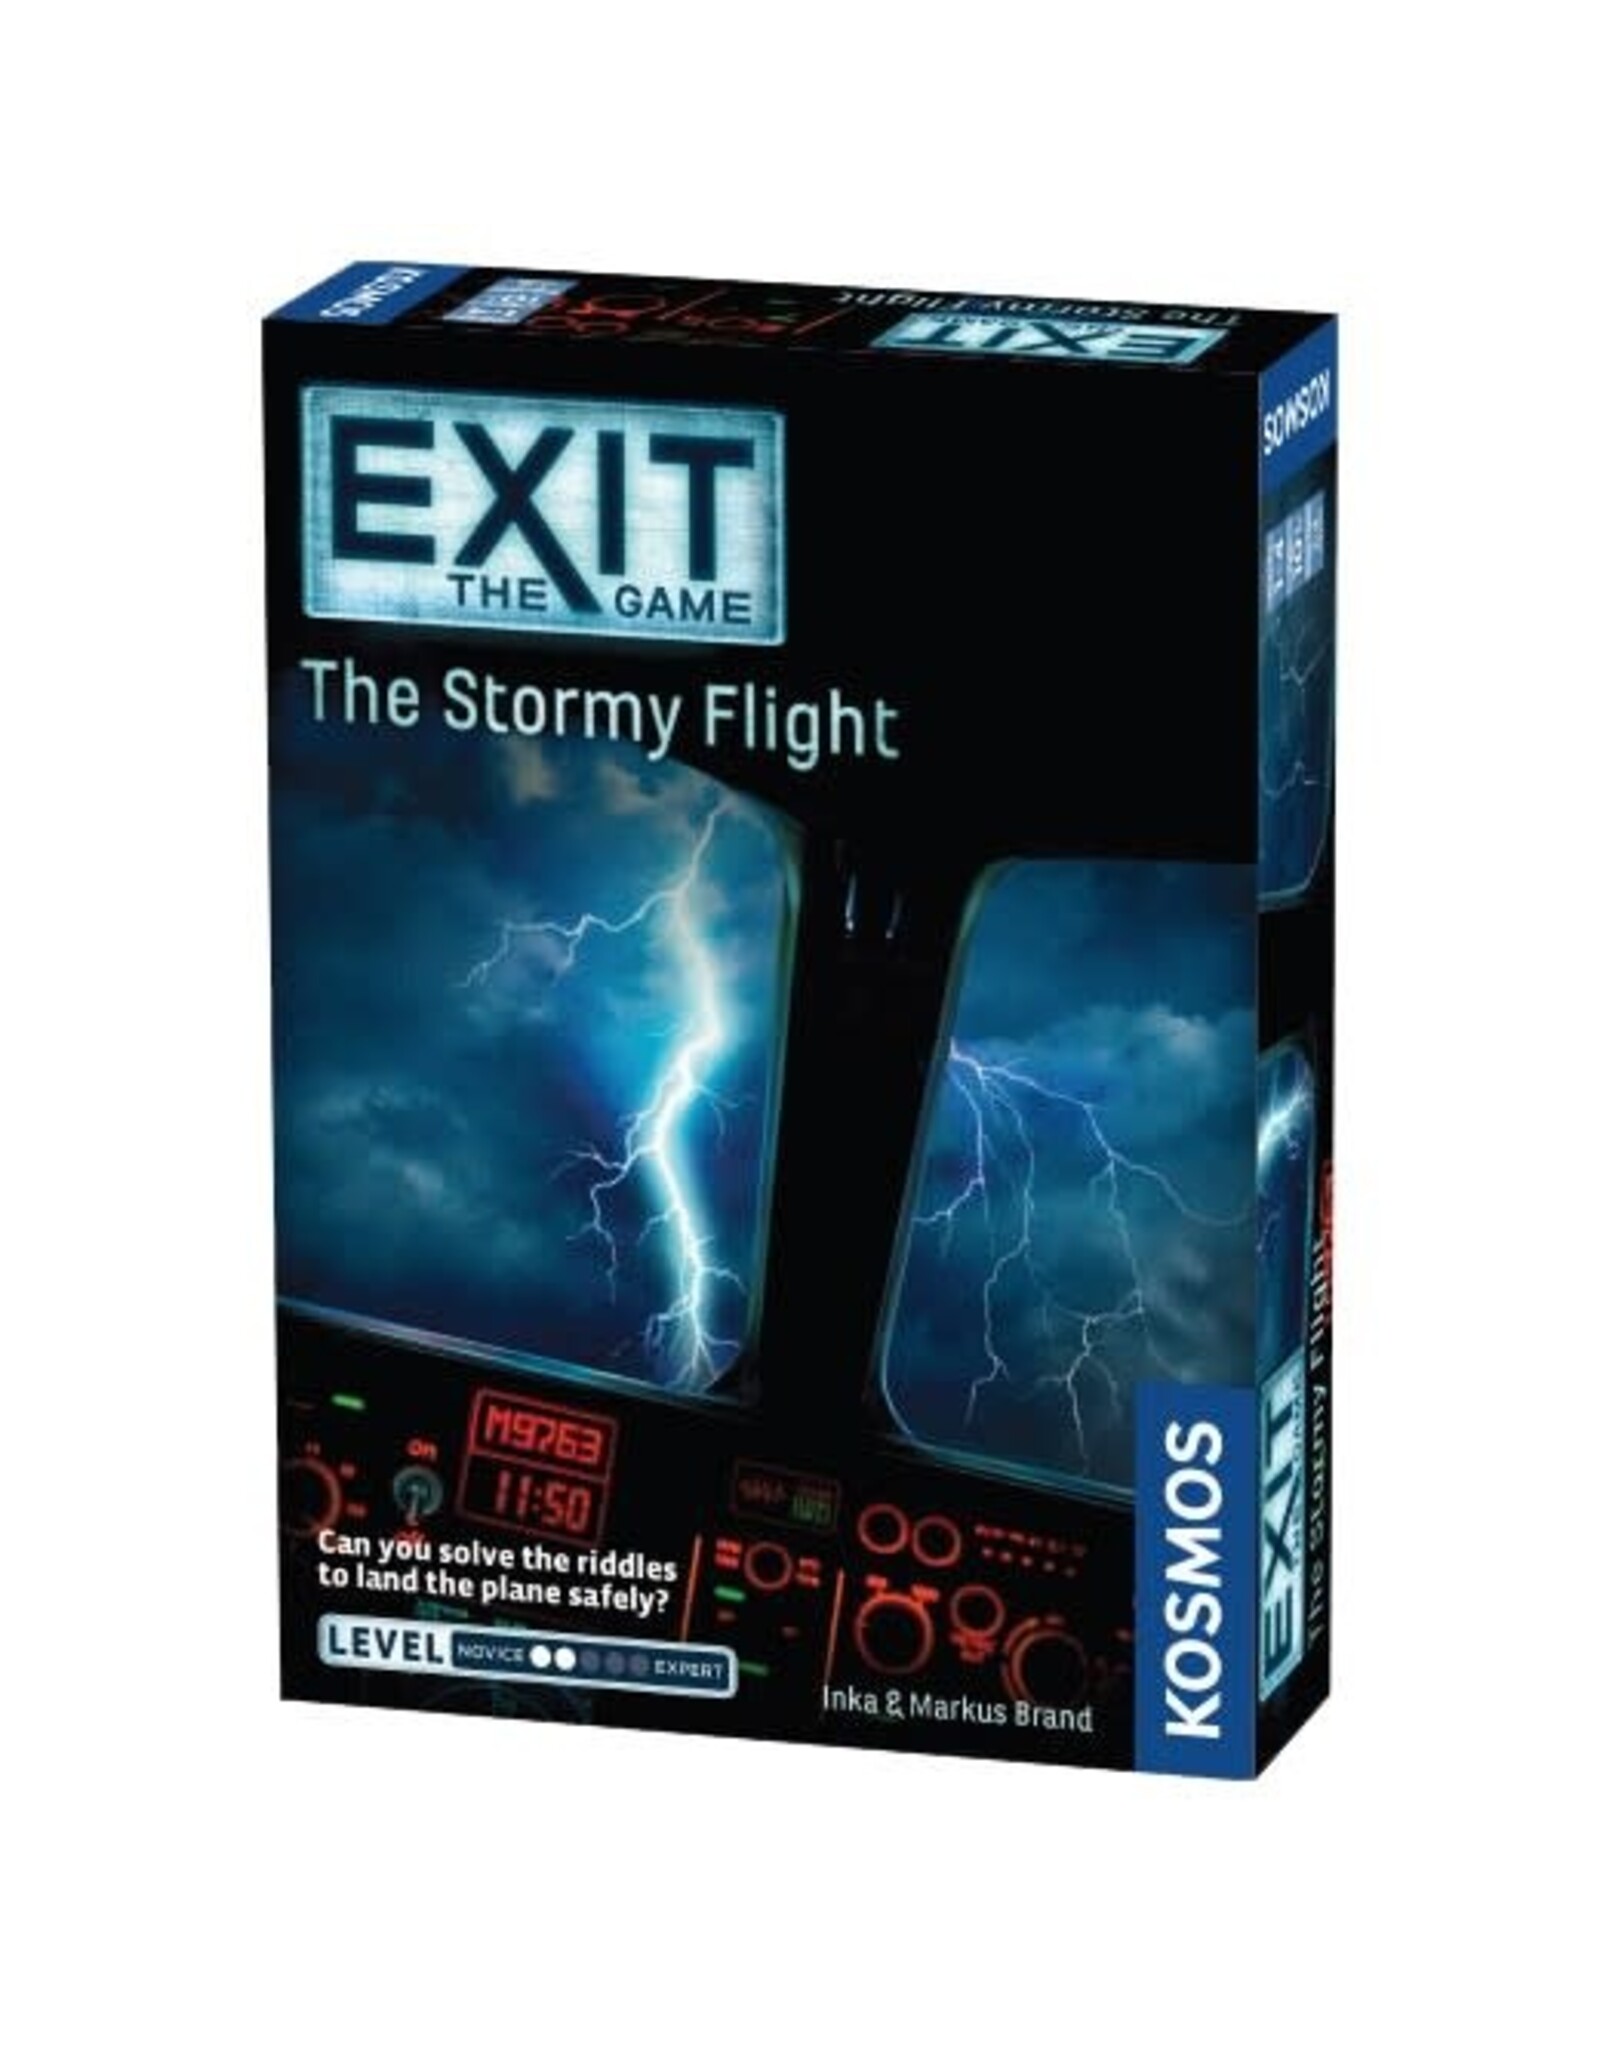 Thames & Kosmos EXIT: The Stormy Flight